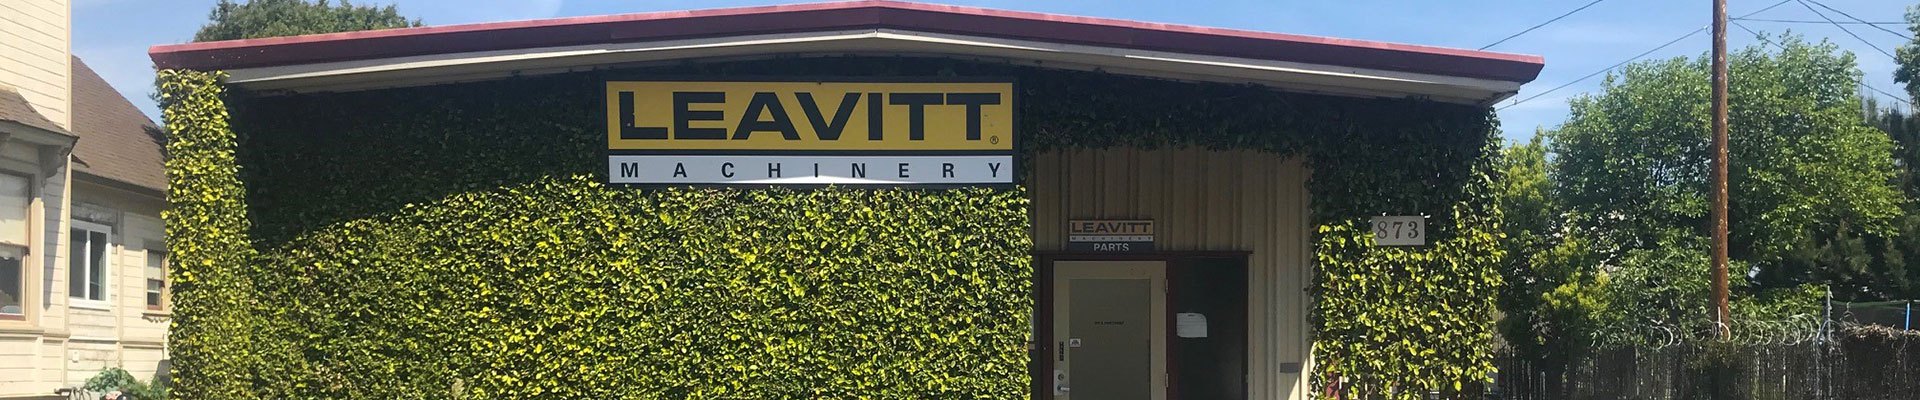 Leavitt Machinery Lodi branch